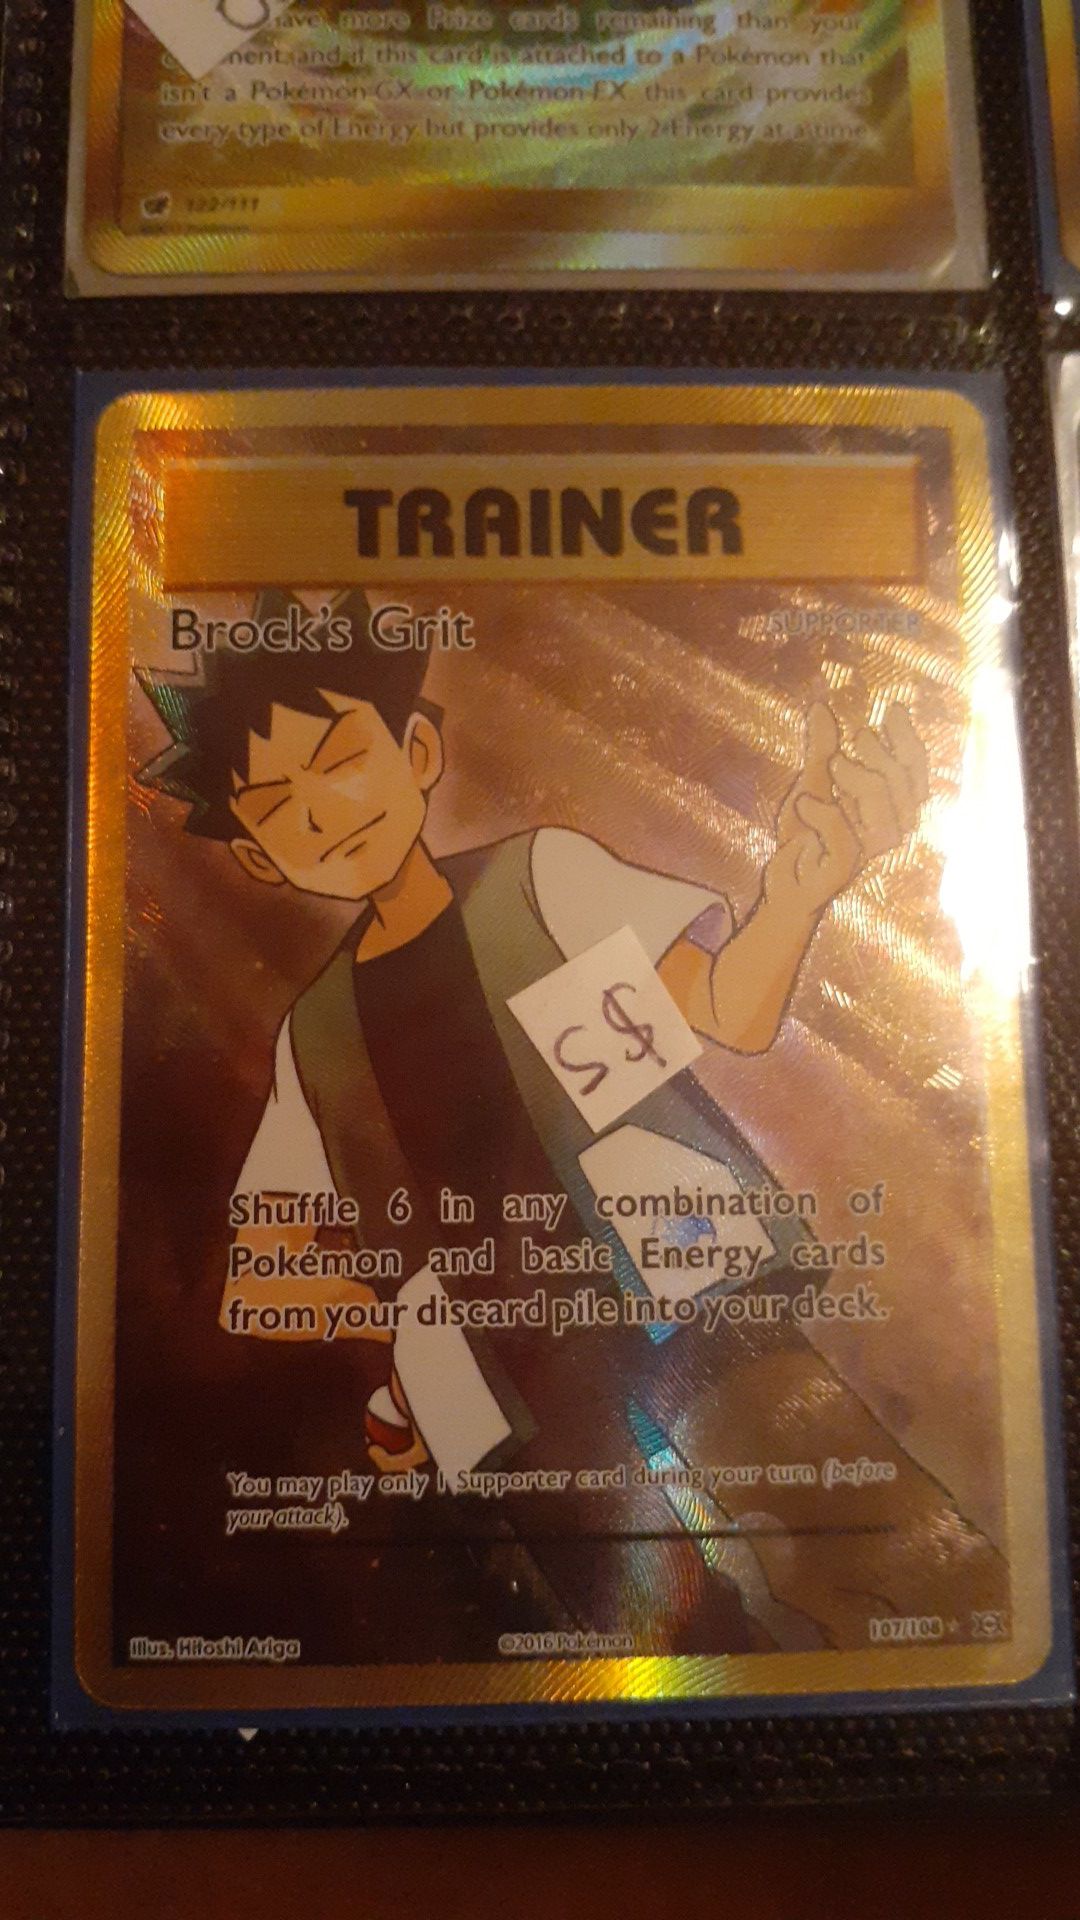 Pokemone trainer ex,gx and break cards